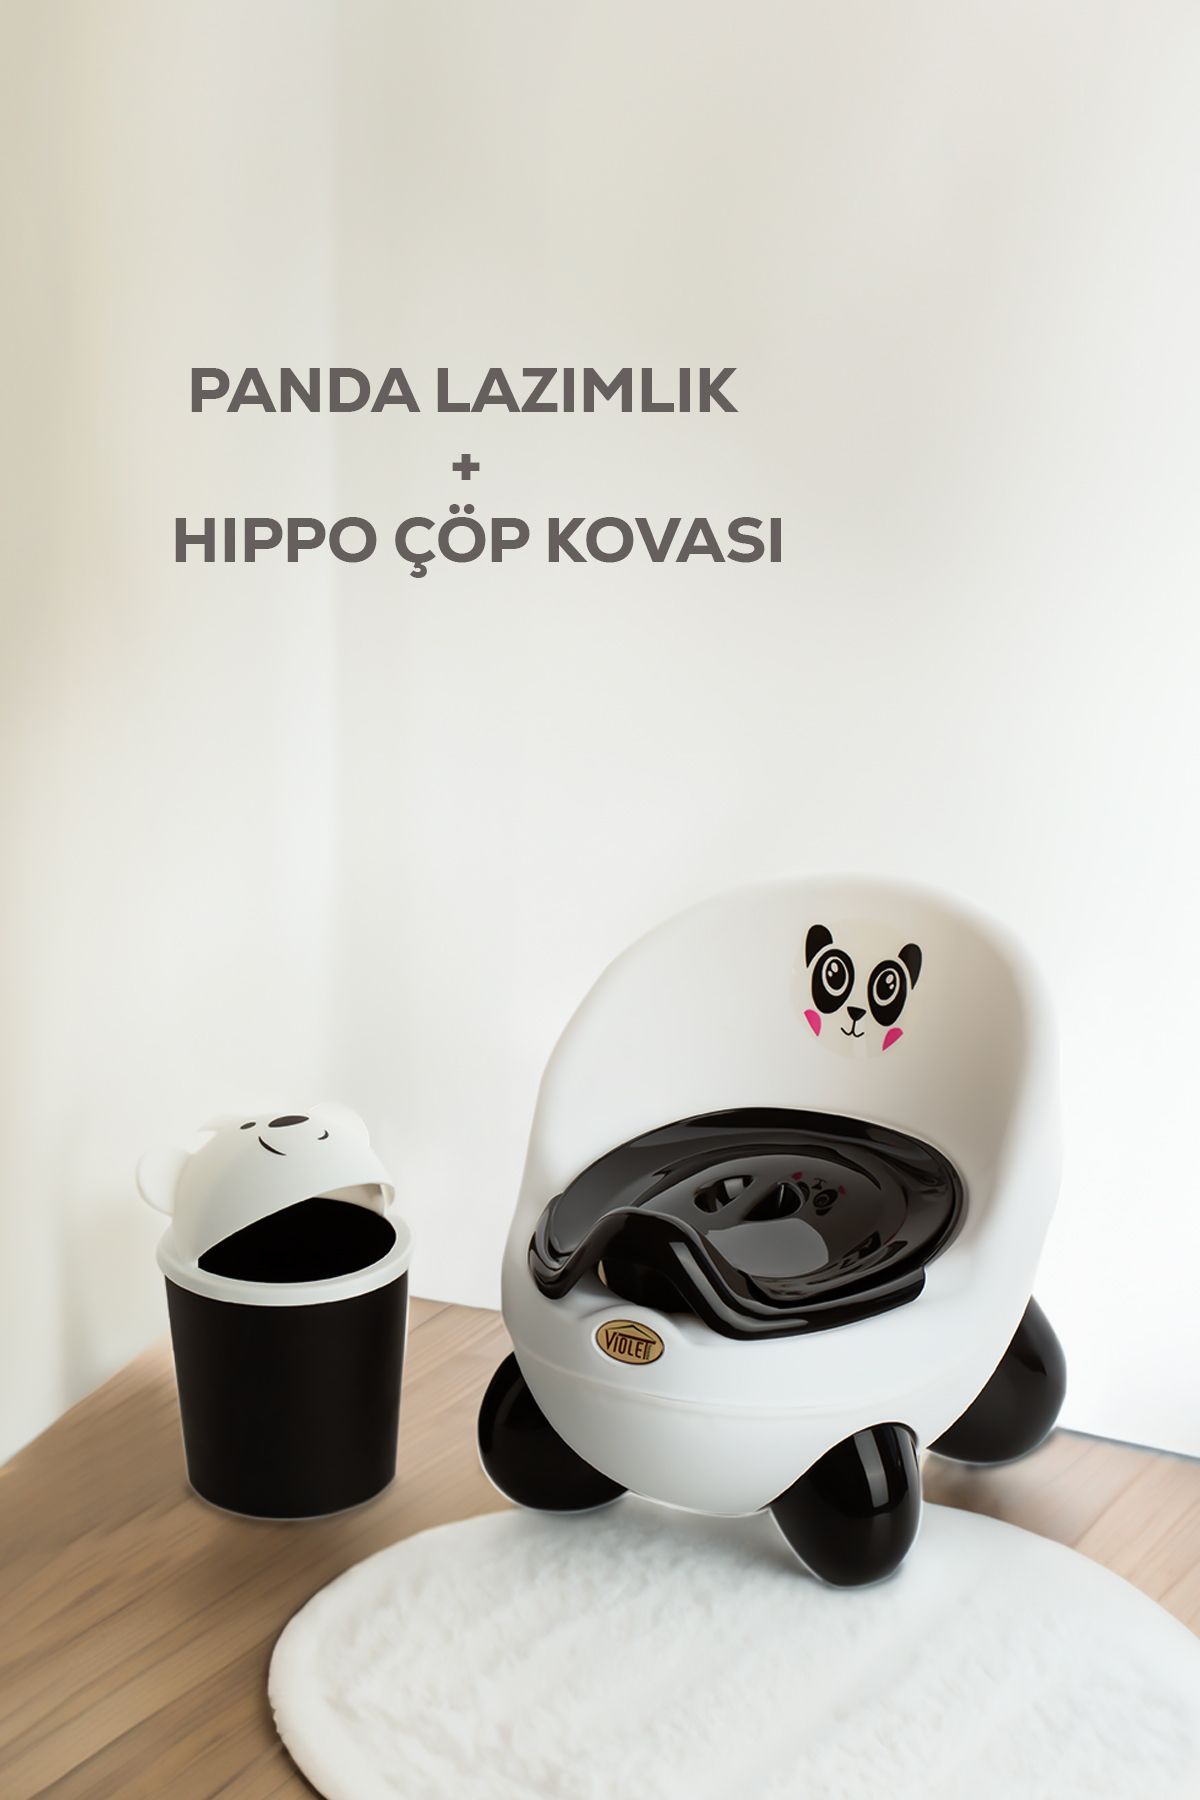 Porsima 0084 Panda Lazımlık - L-586 Hippo Çöp Kovası -2 L Siyah Beyaz